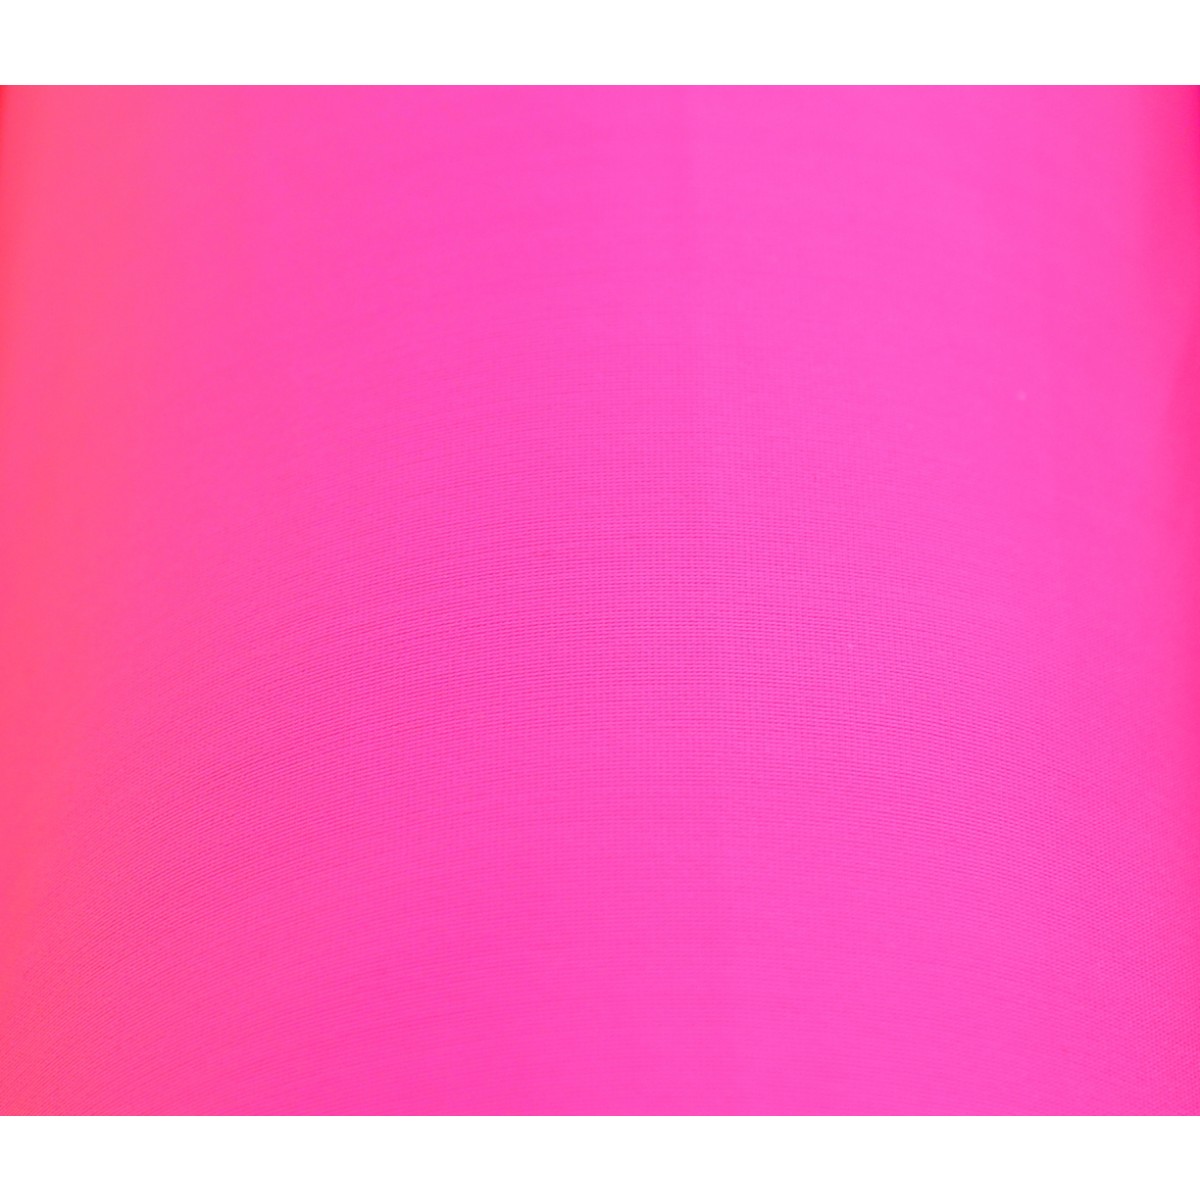 Bright Pink Backgrounds - WallpaperSafari